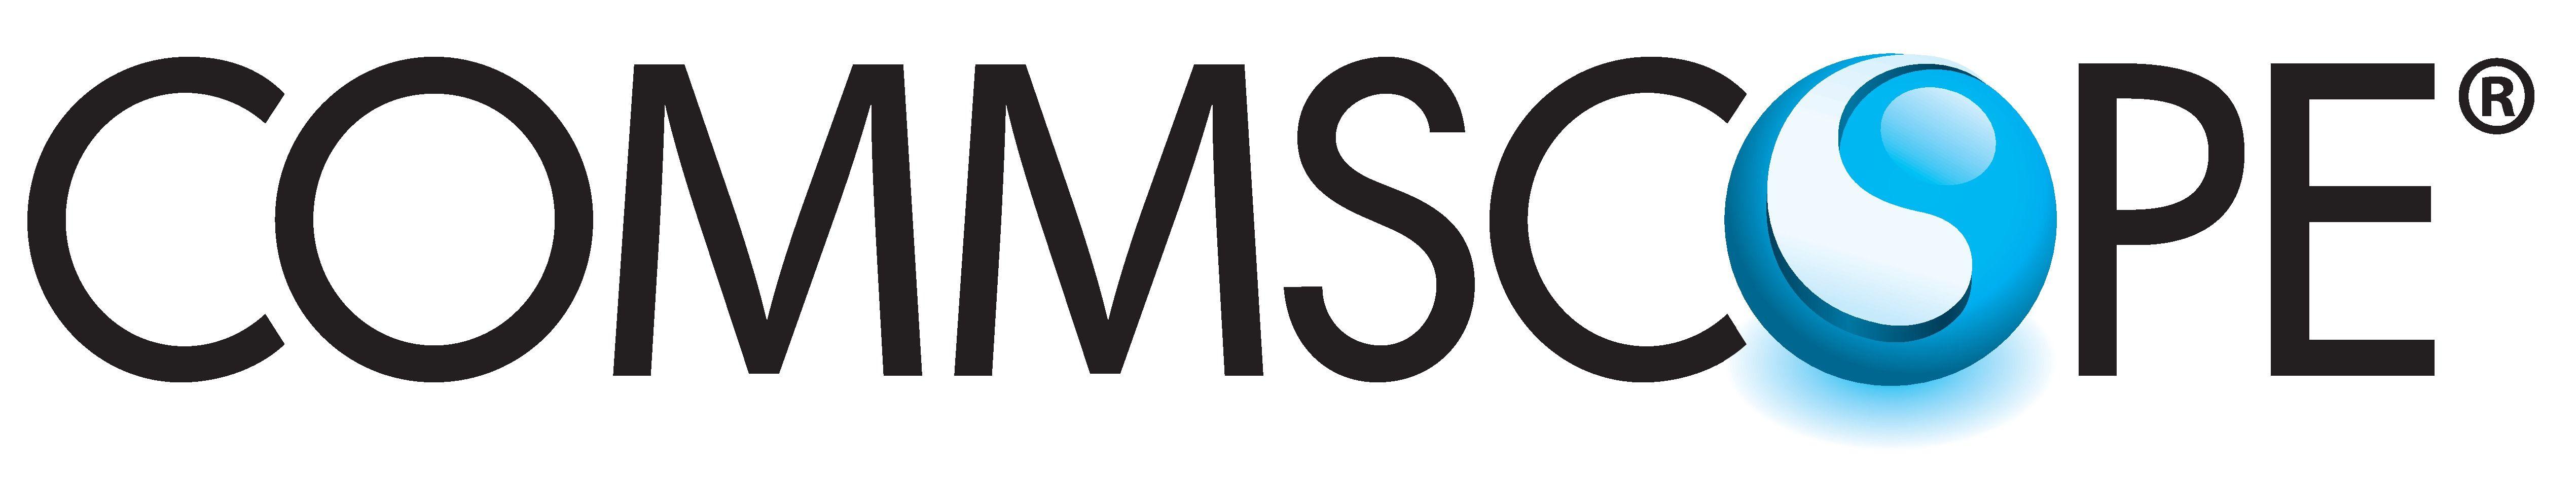 CommScope Logo - Commscope Logos